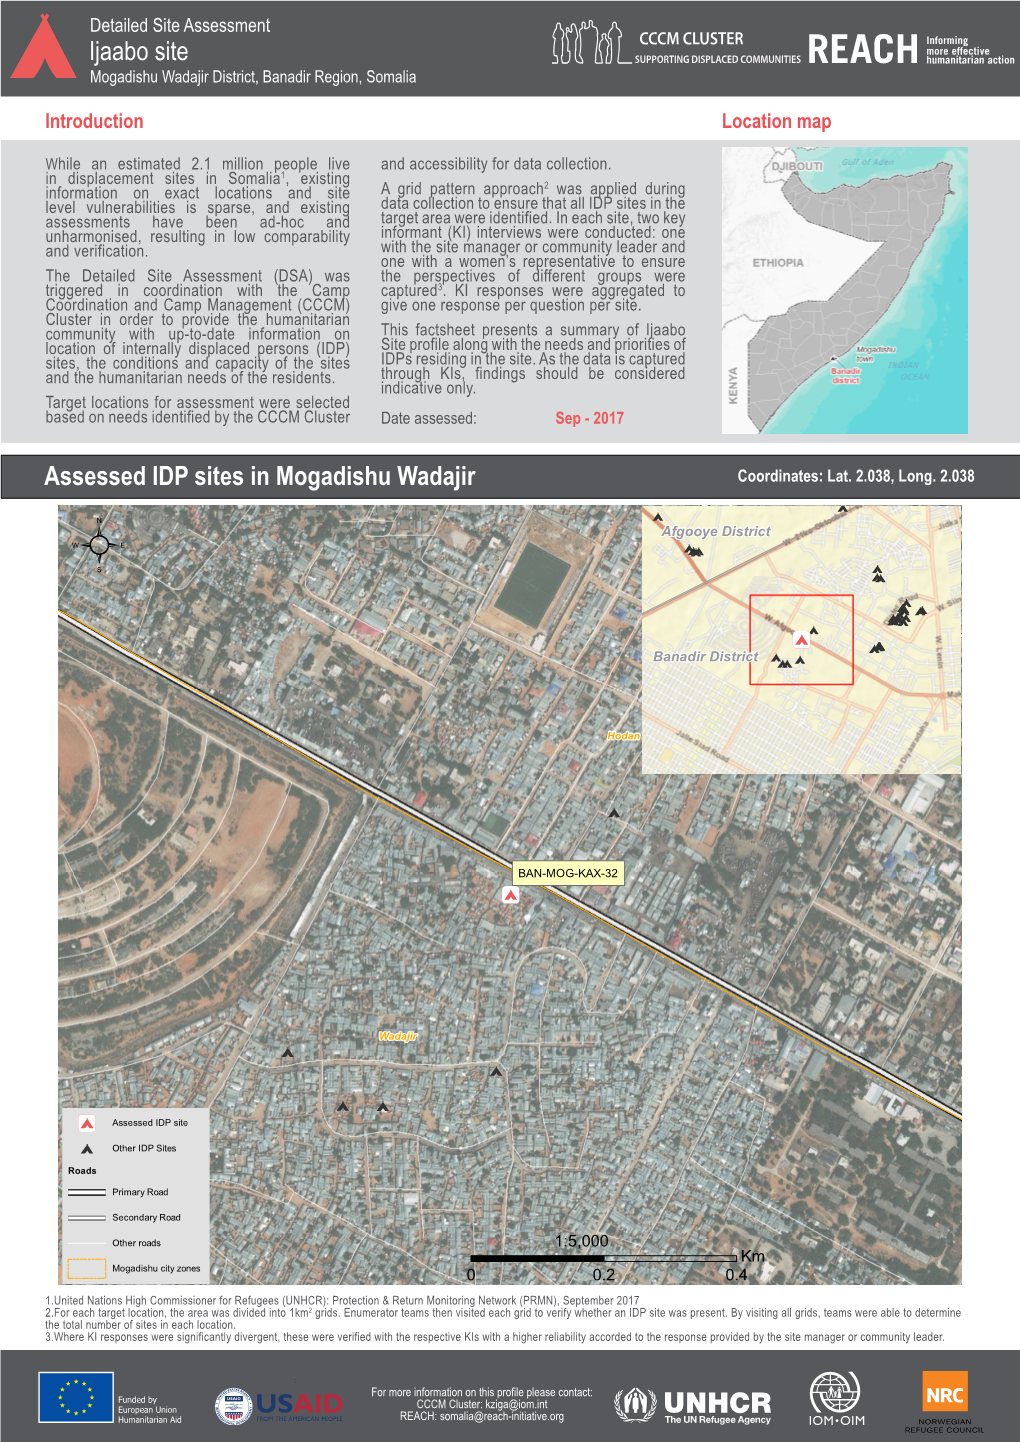 Ijaabo Site Assessed IDP Sites in Mogadishu Wadajir